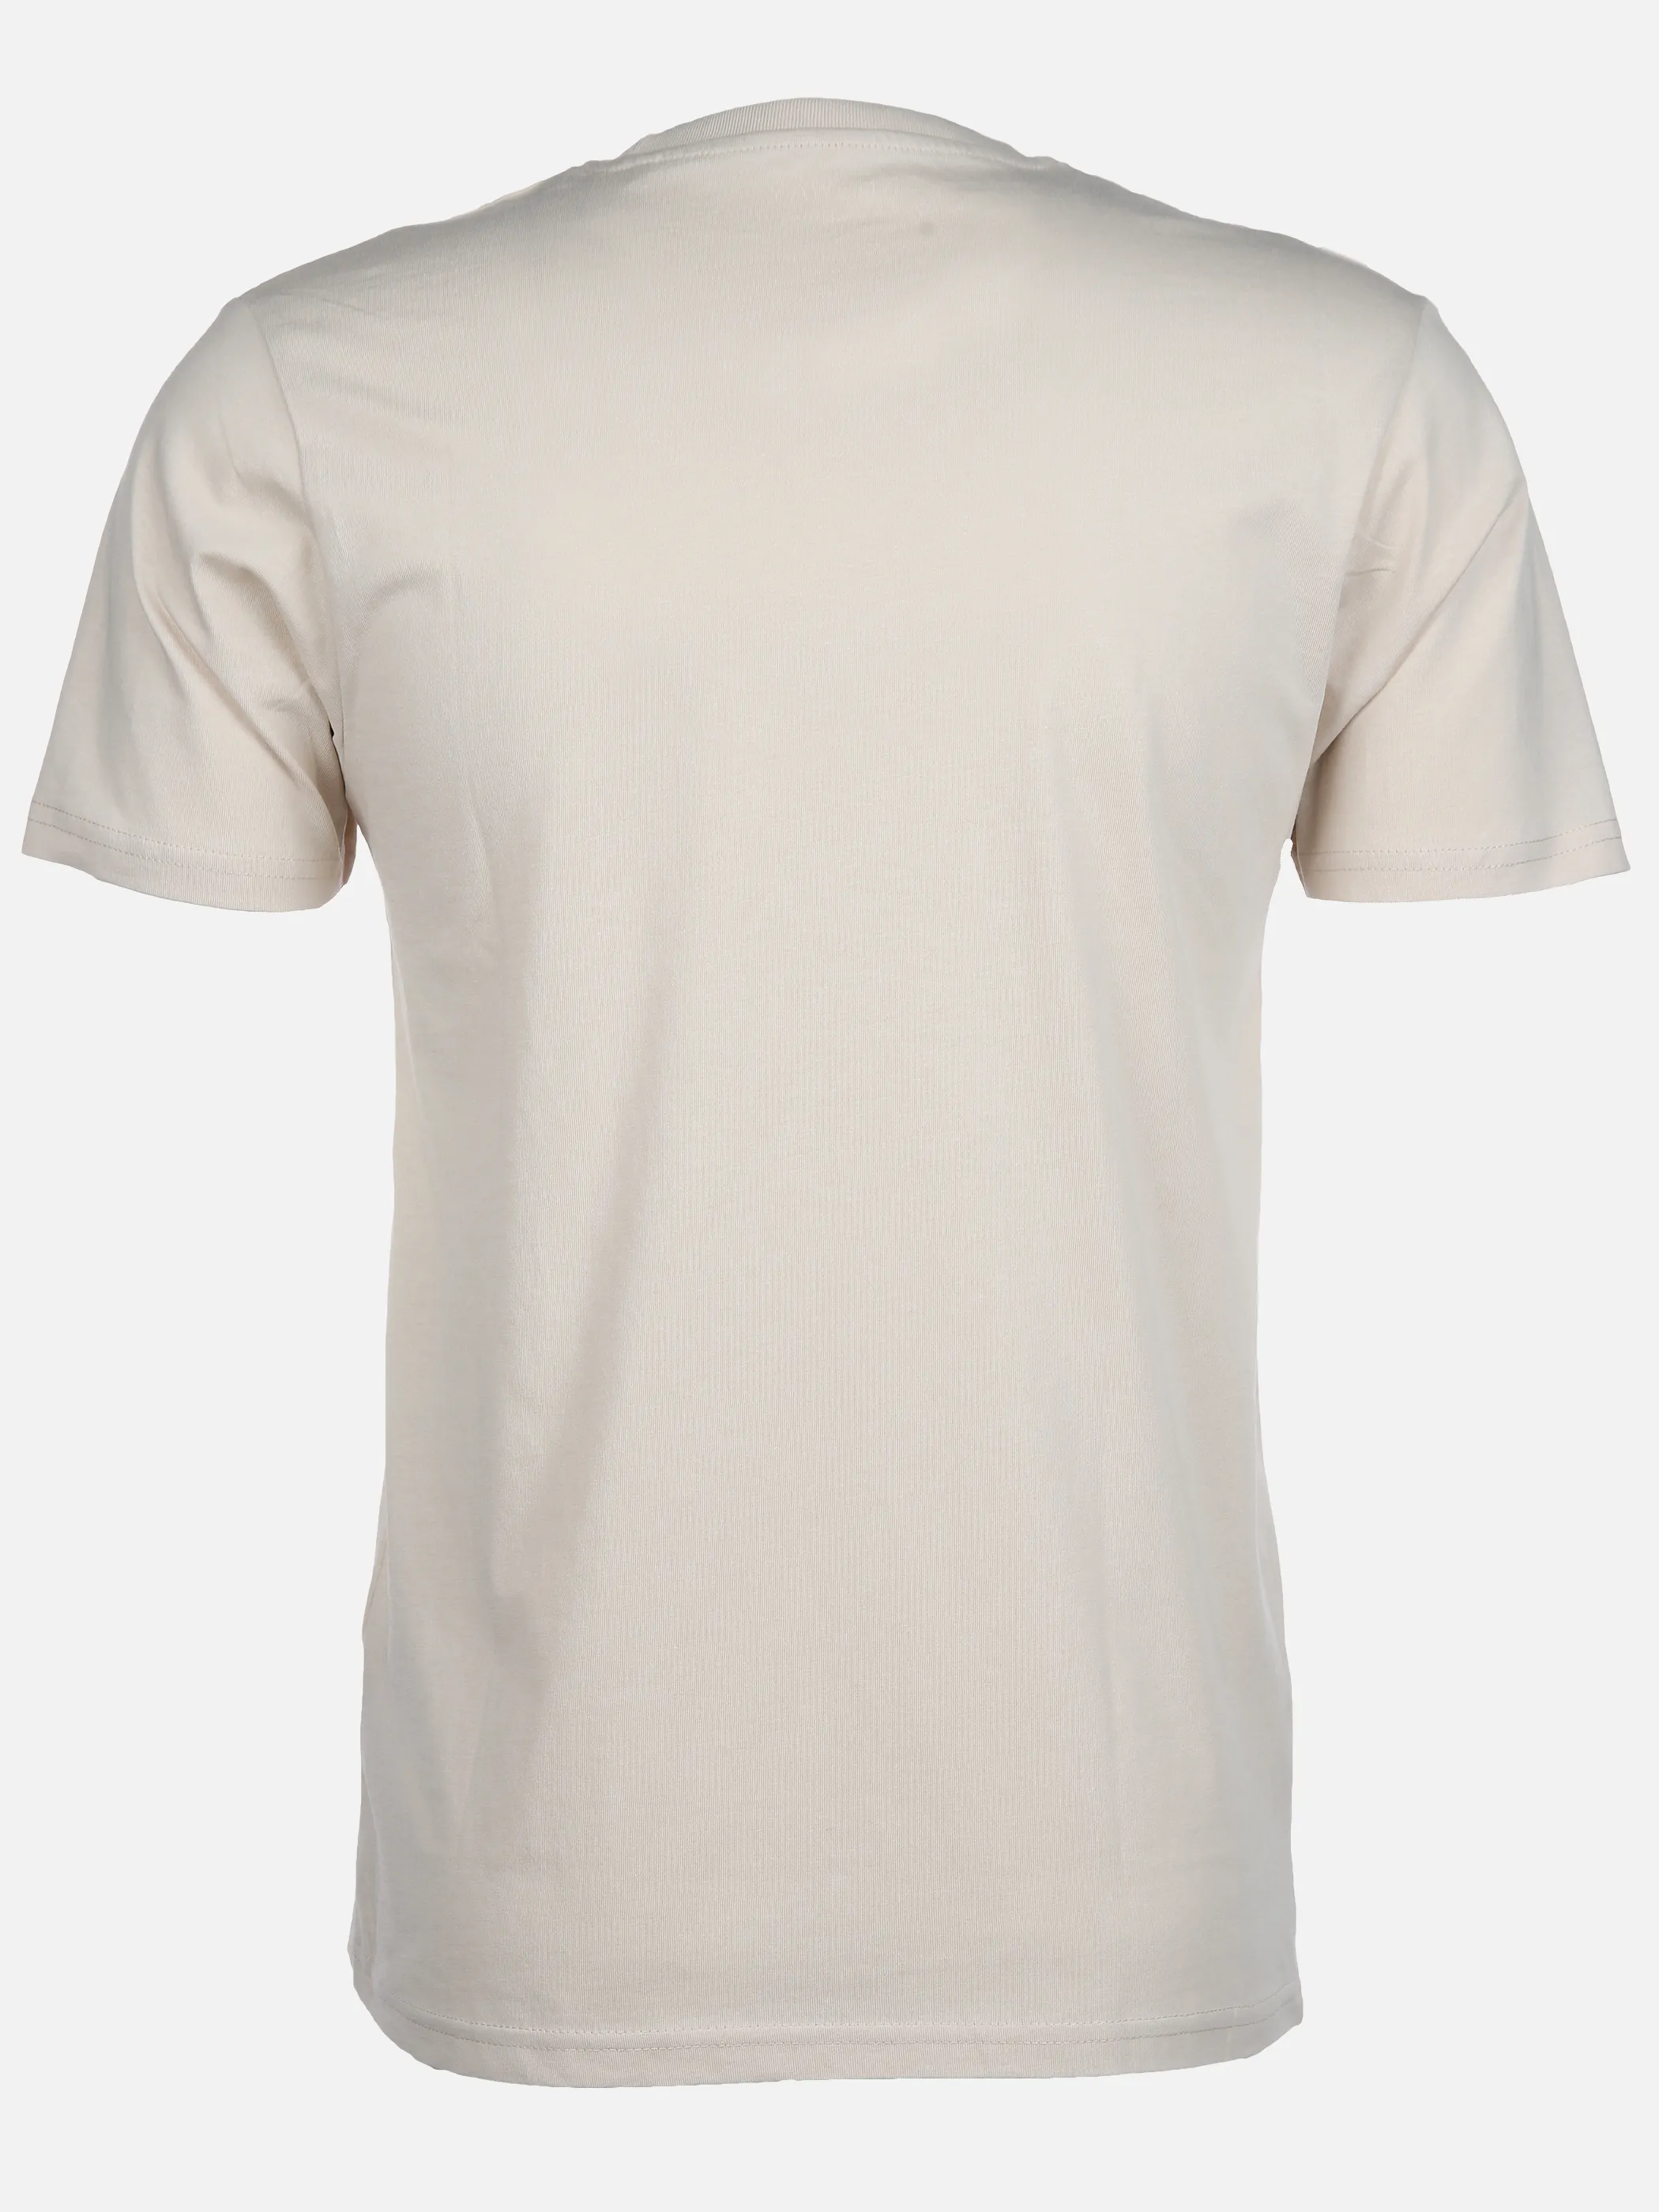 One Way YF-He T-Shirt Basic Beige 890068 13-0000TCX 2